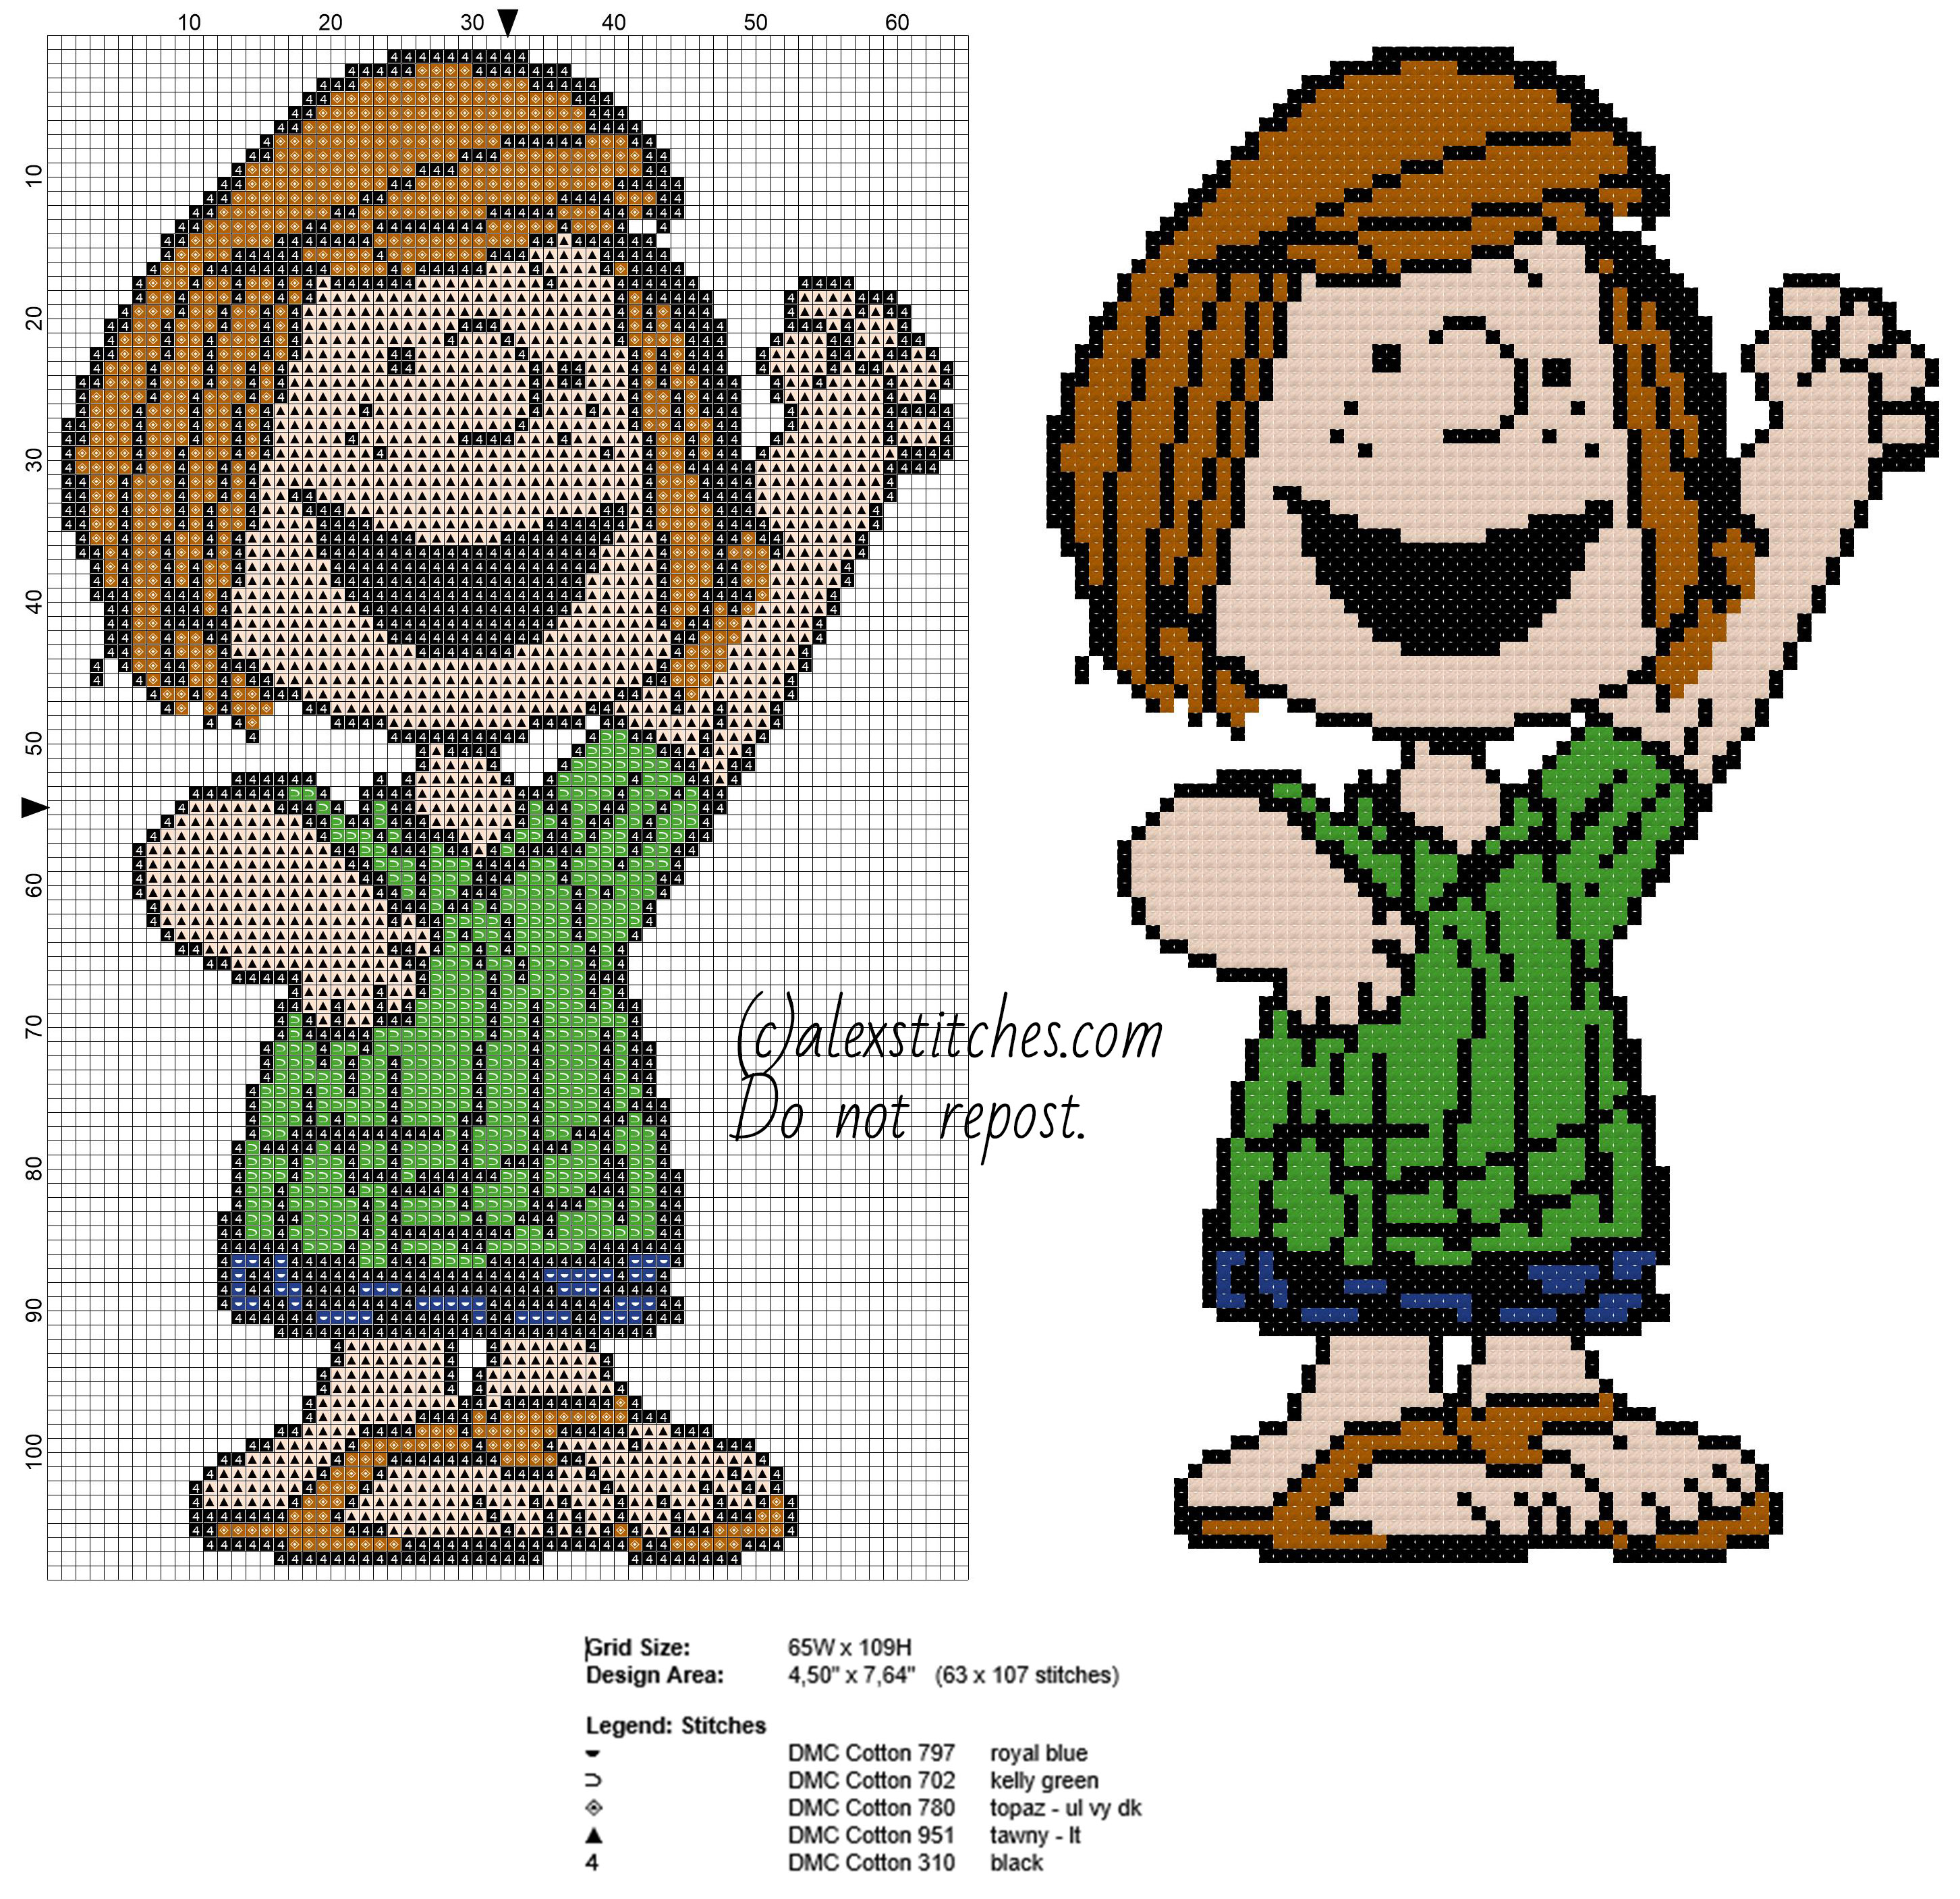 Patty Peanuts cartoon character free cross stitch pattern made with pcstitch